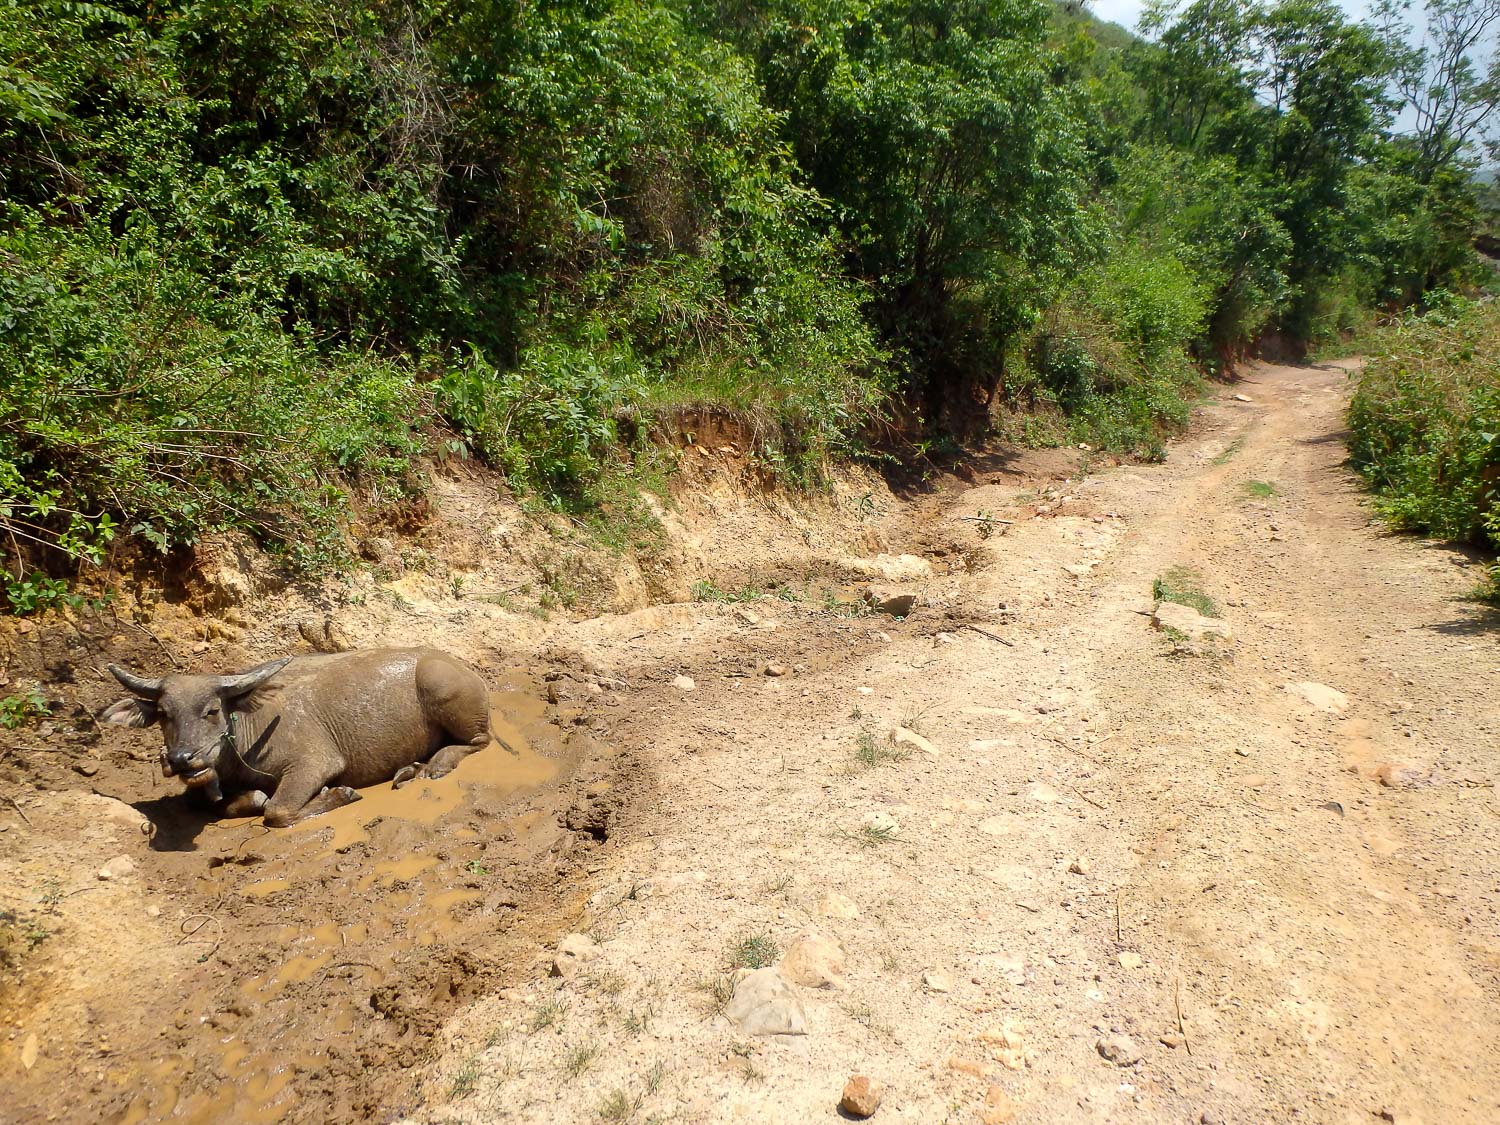 Water buffalo wallowing on the road